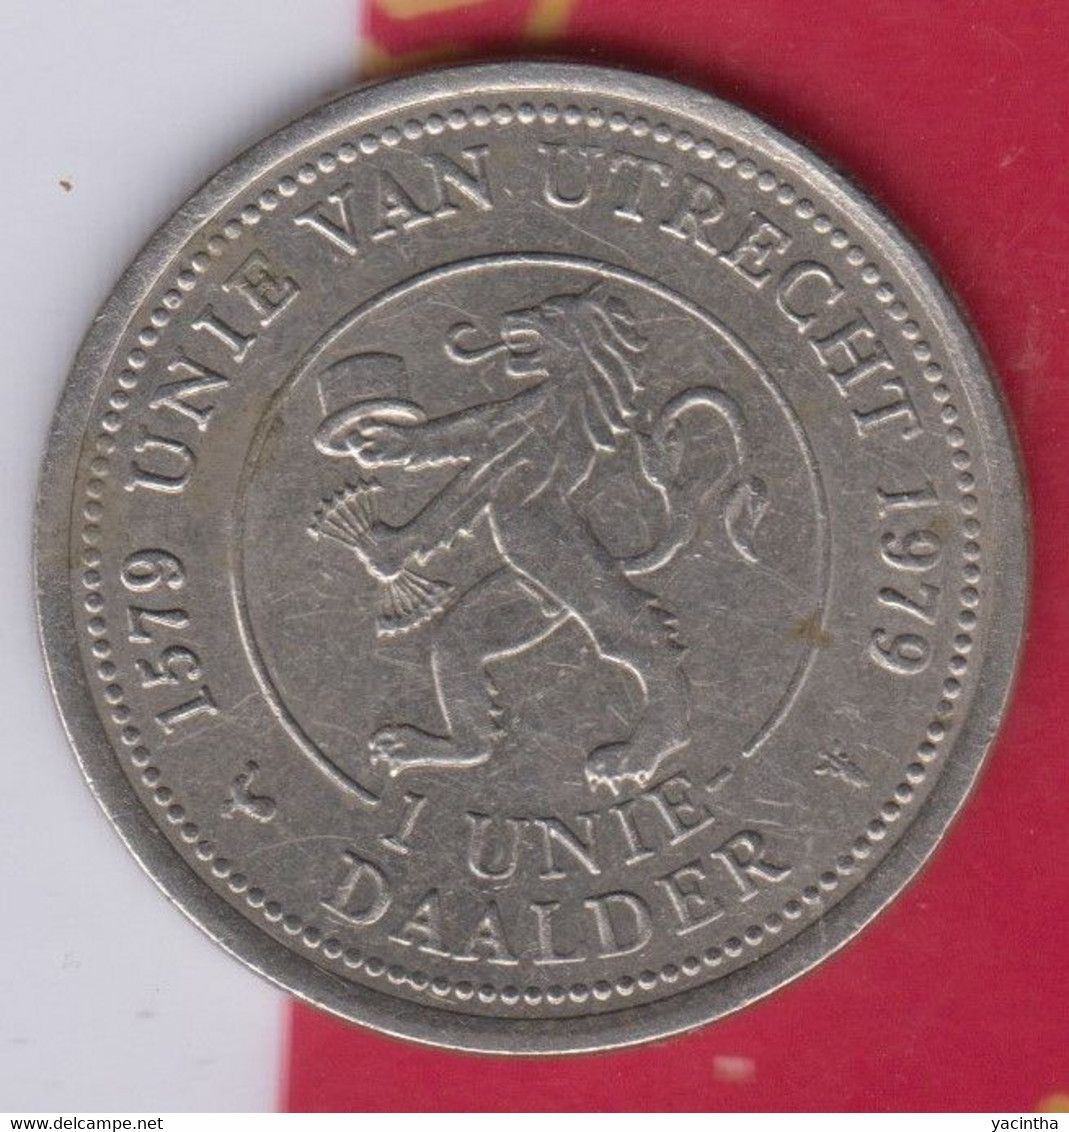 1 Unie Daalder  . Unie Van Utrecht  1979      (1016) - Monete Allungate (penny Souvenirs)